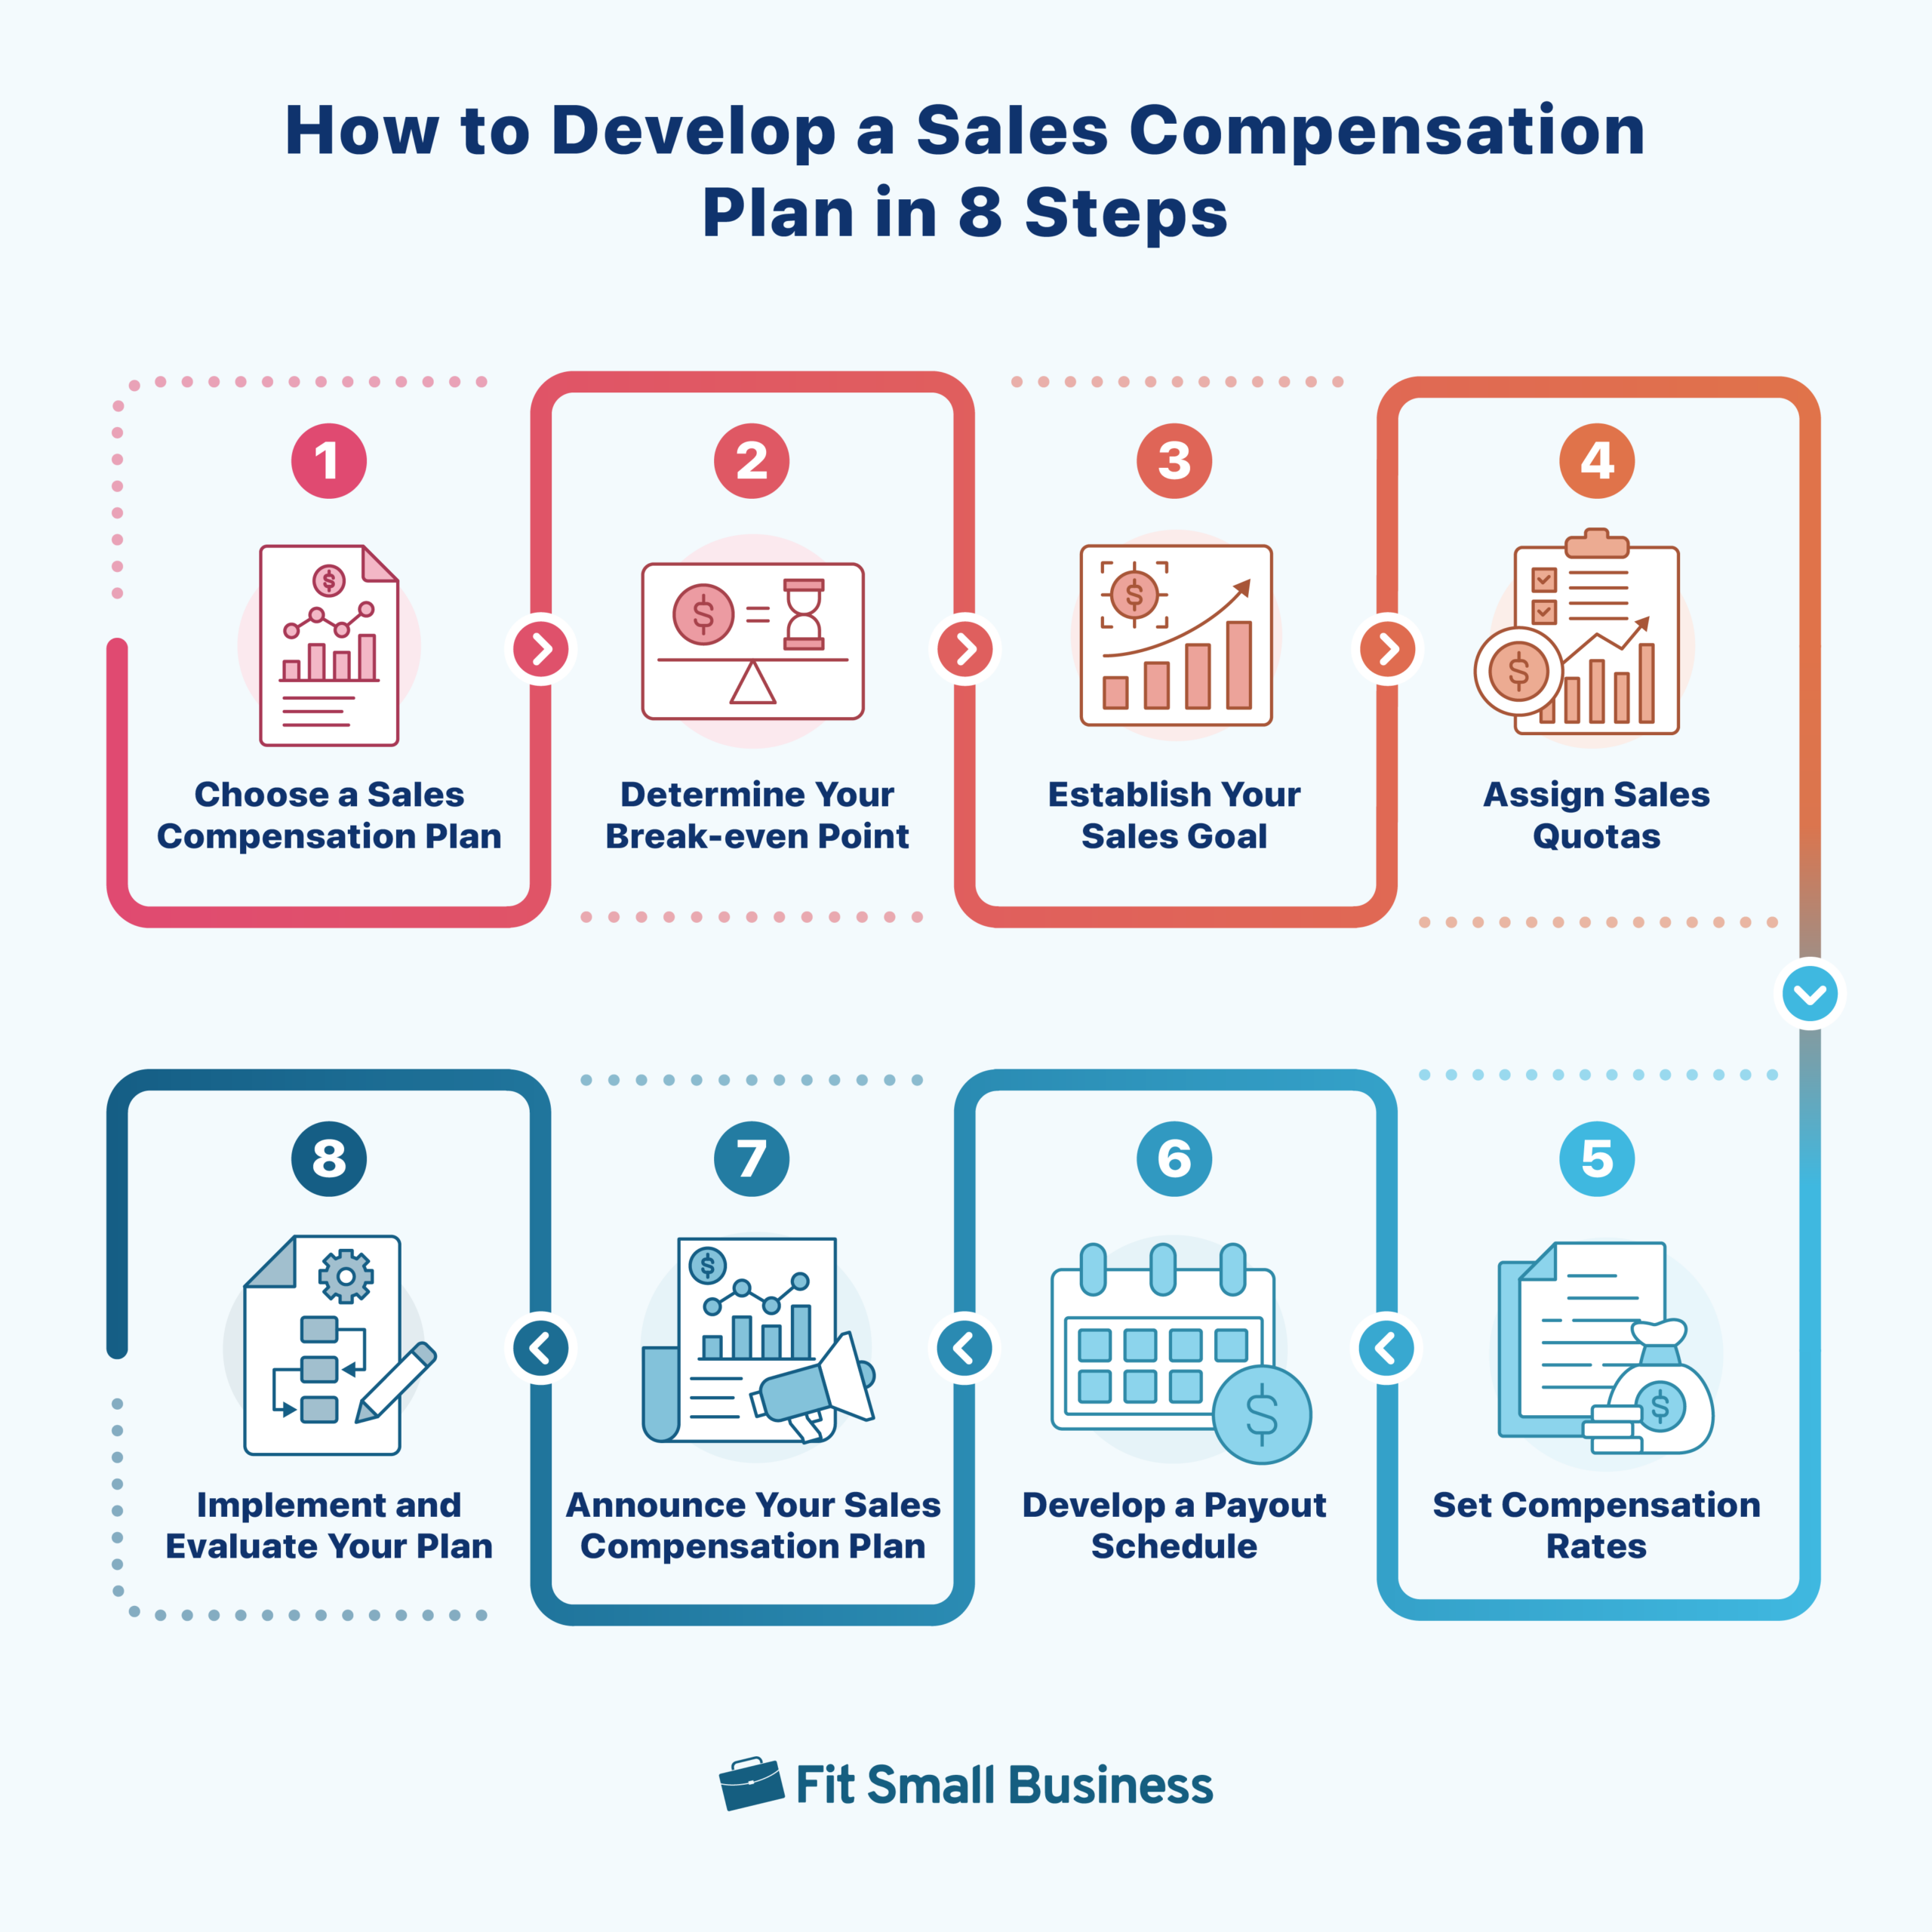 How to Develop a Sales Compensation Plan.